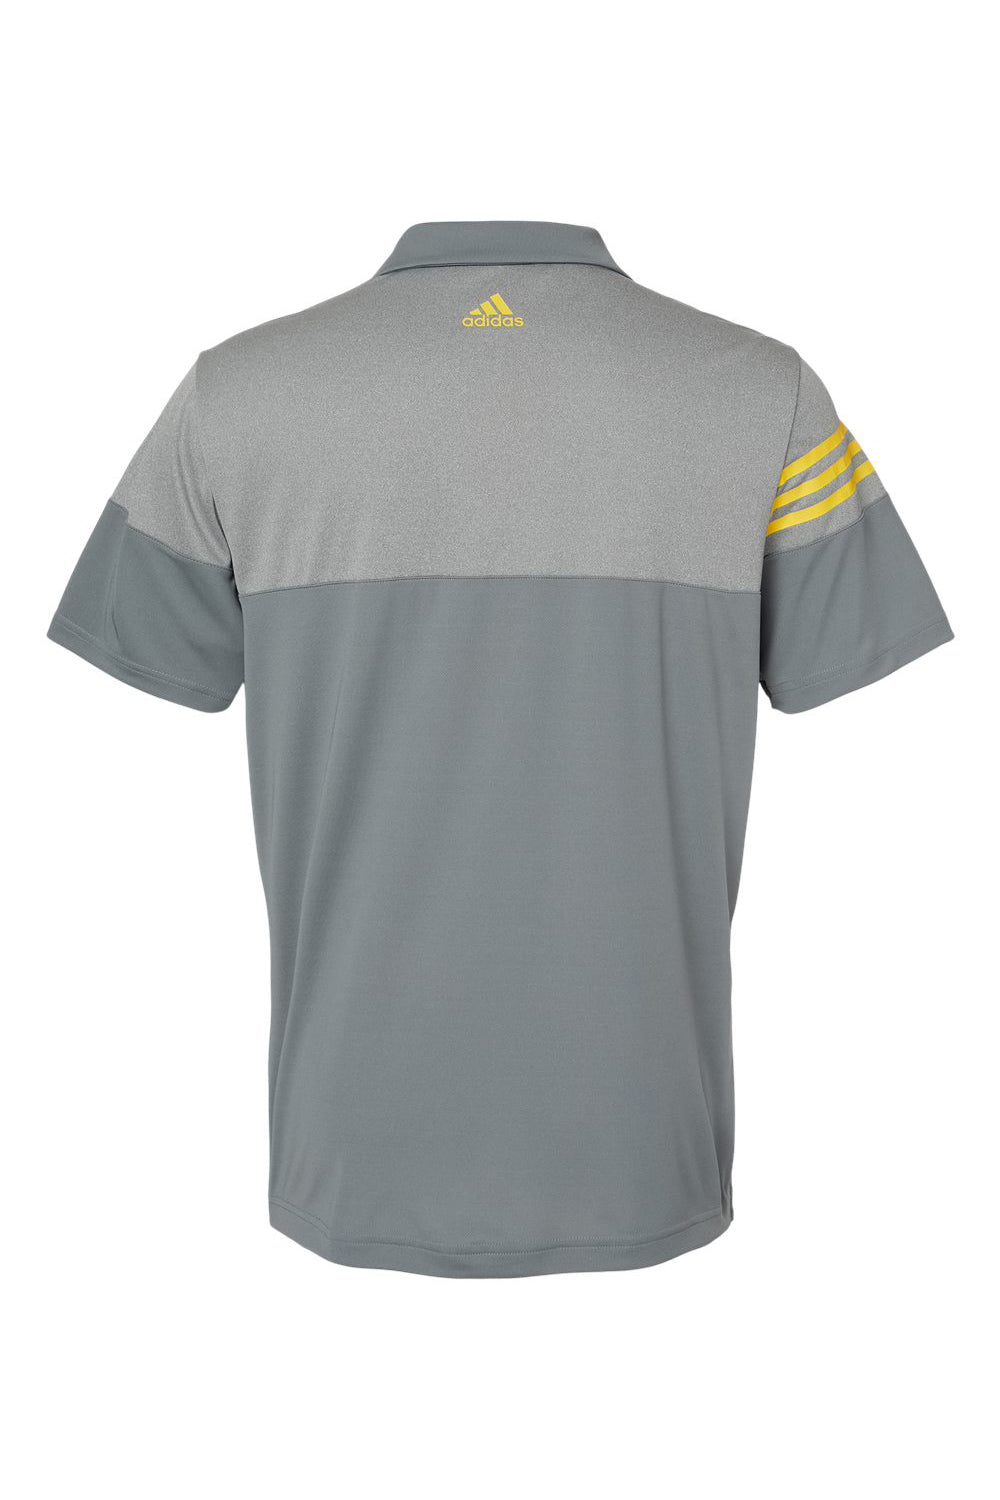 Adidas A213 Mens 3 Stripes Heathered Colorblock Short Sleeve Polo Shirt Vista Grey/Yellow Flat Back